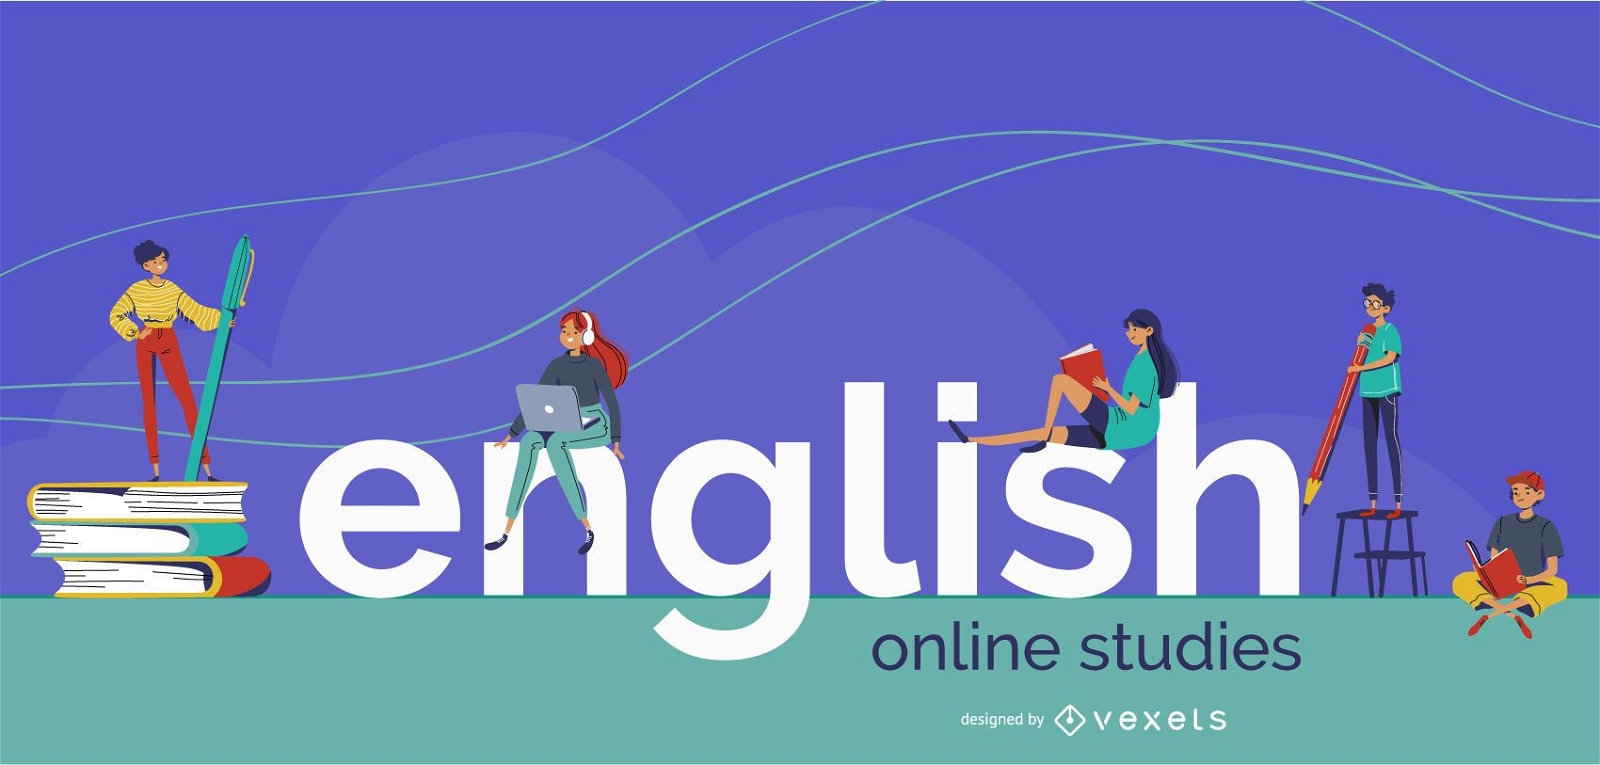 High School English Studies Cover Design